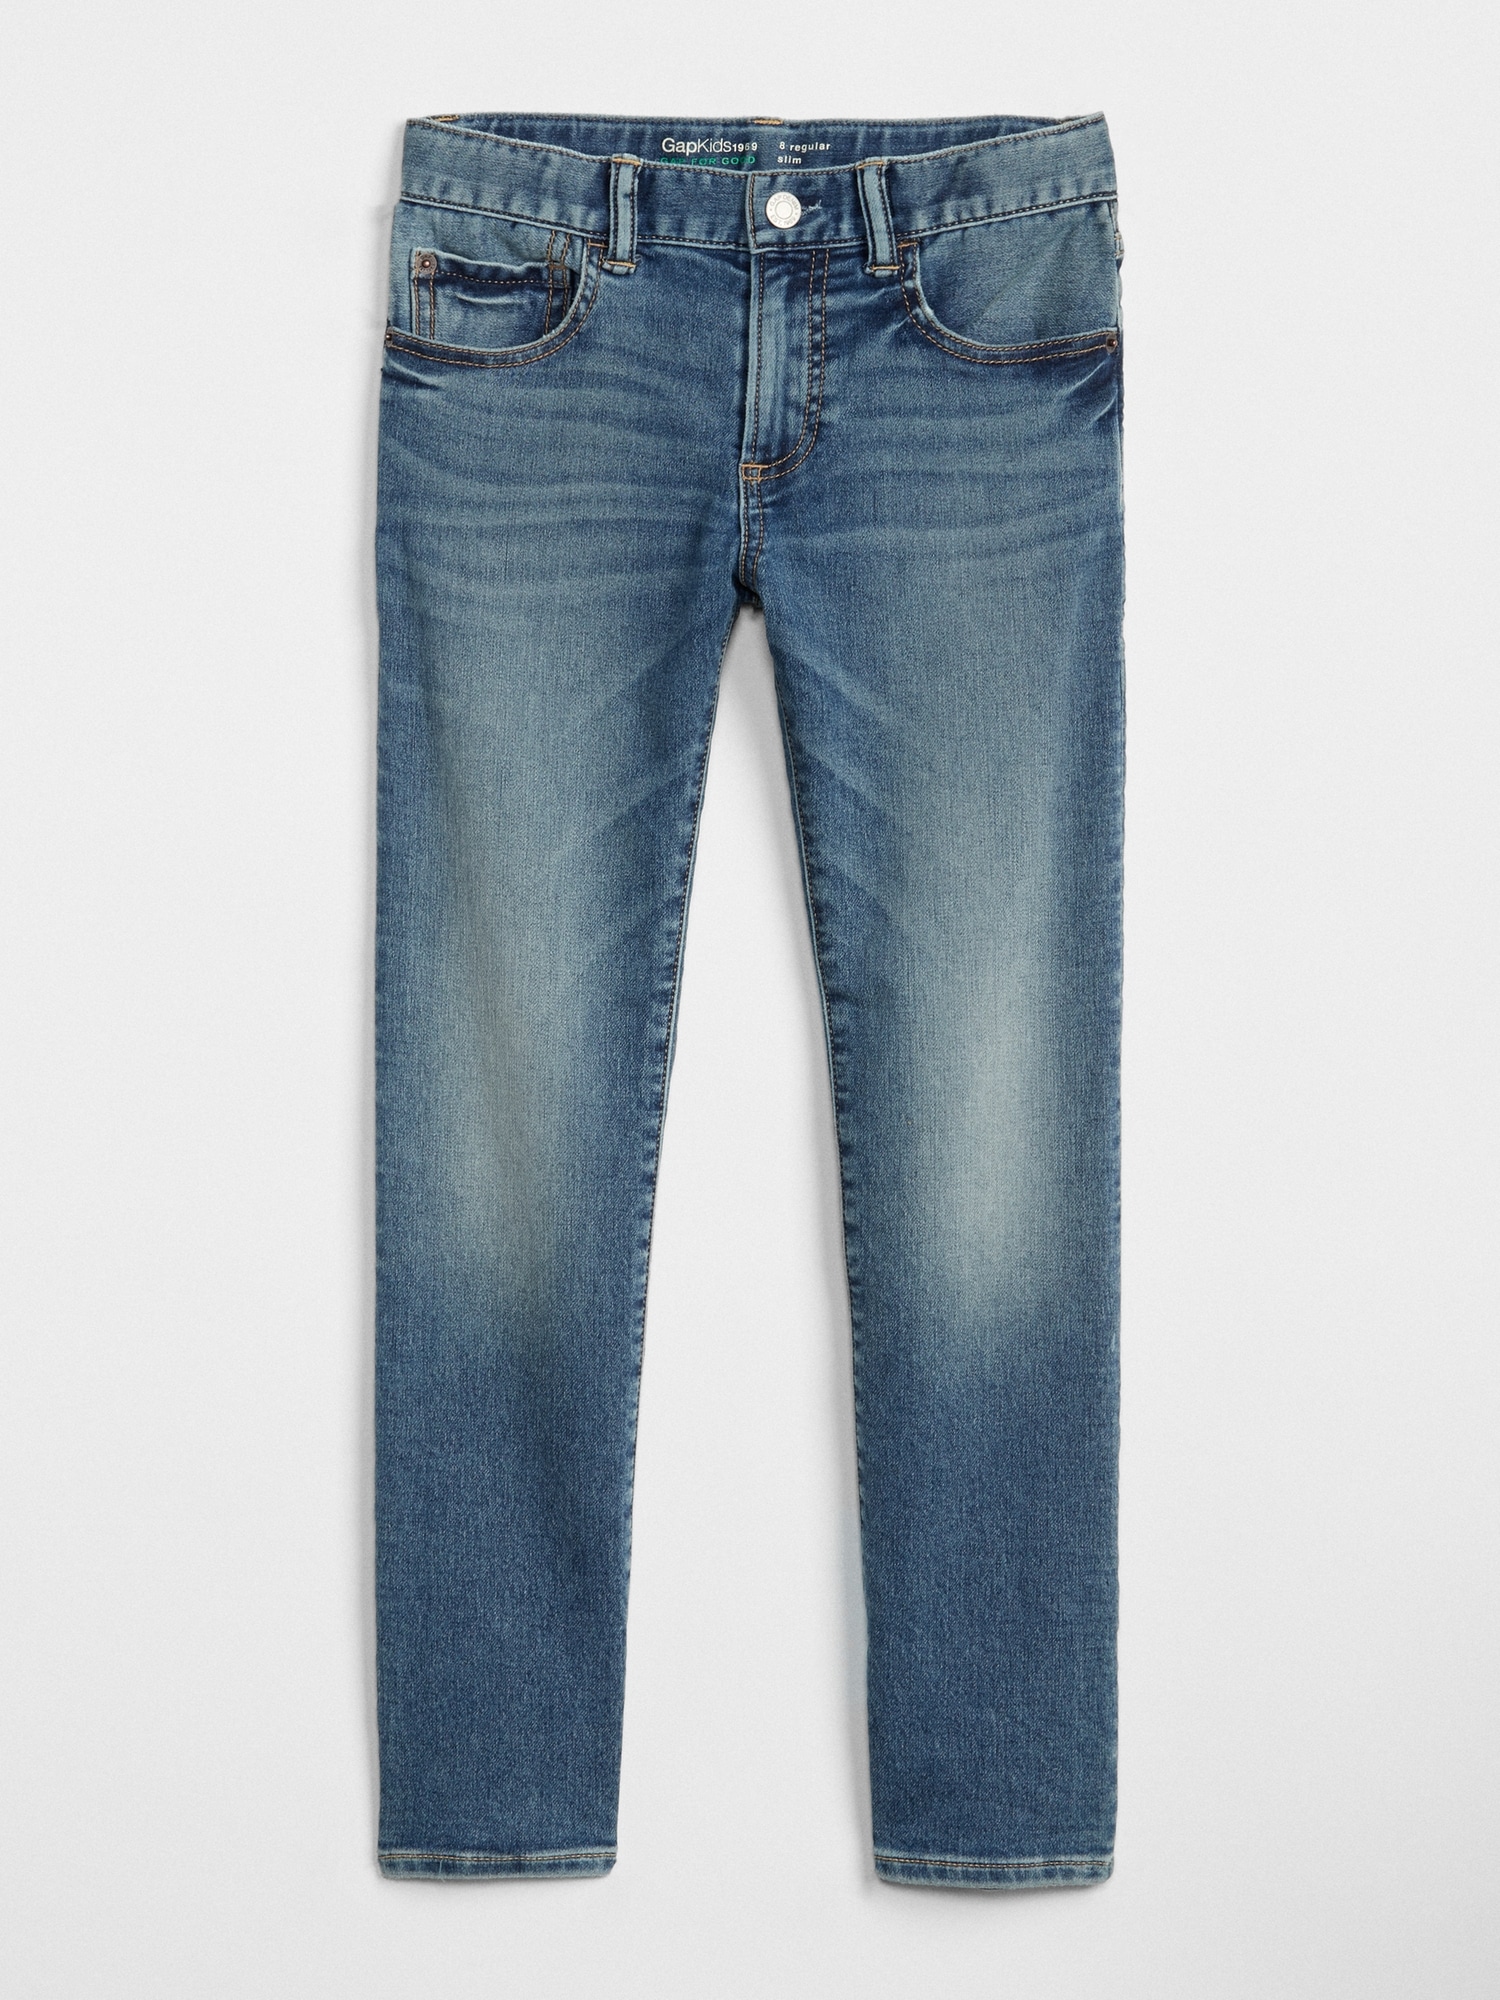 GAP 1969 Men's Denim Jeans Regular Fit, Straight Leg Pants with Washwell